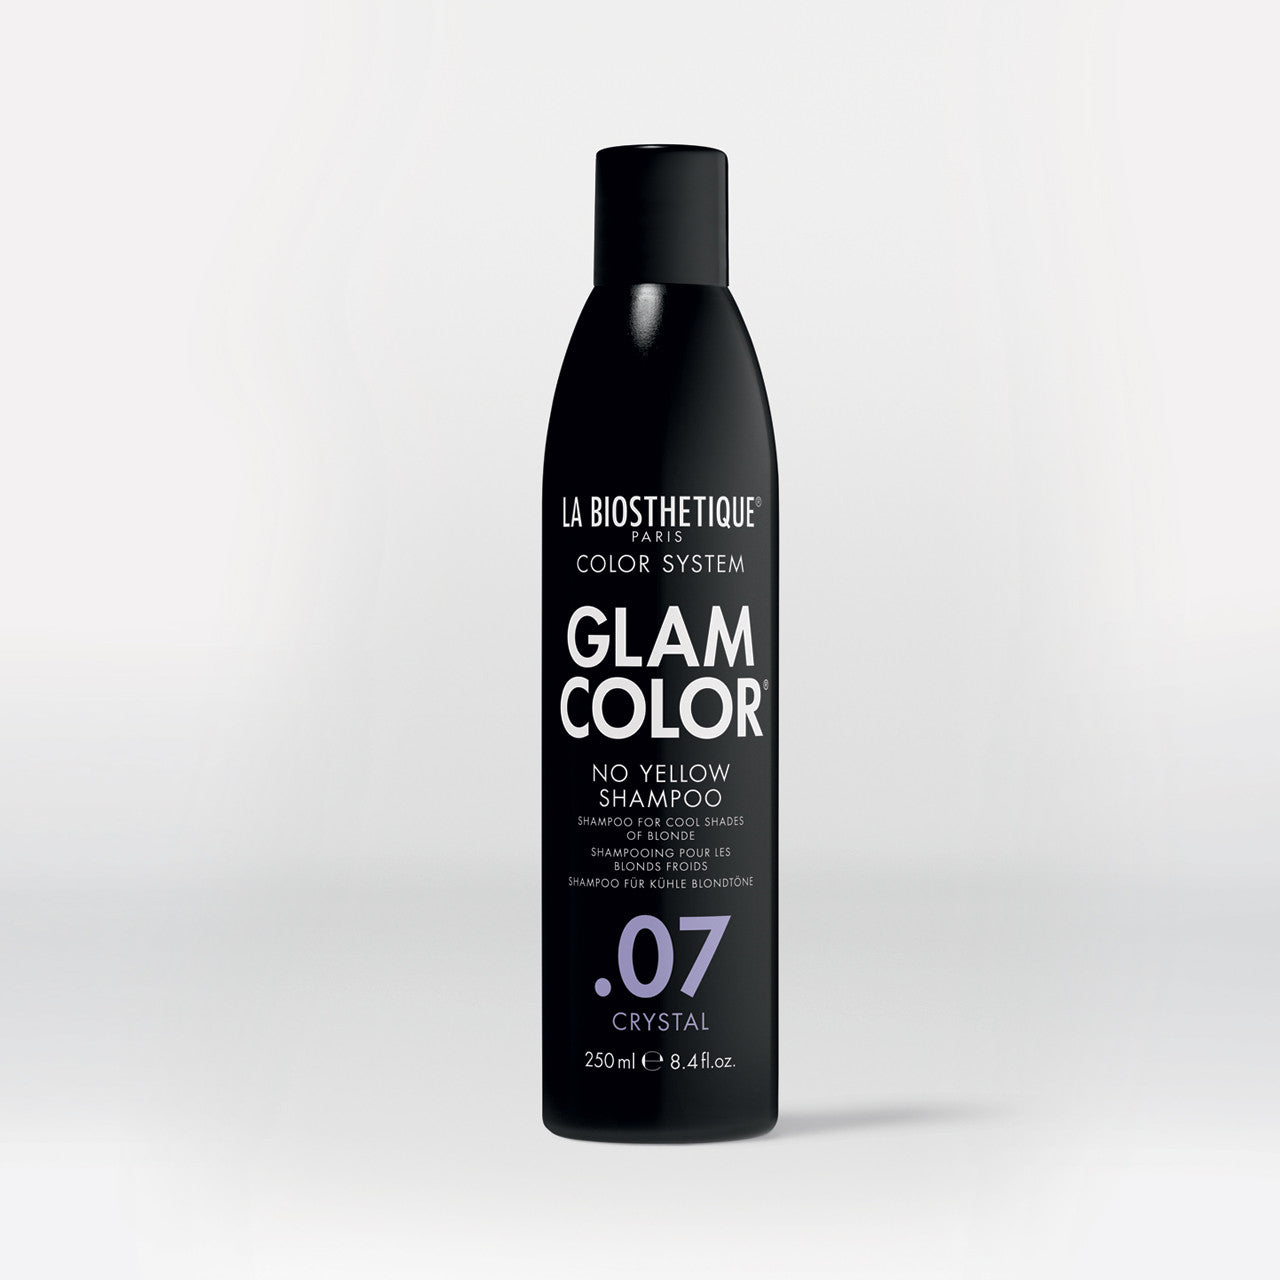 La Biosthetique's Glam Color No Yellow Shampoo .07 Crystal